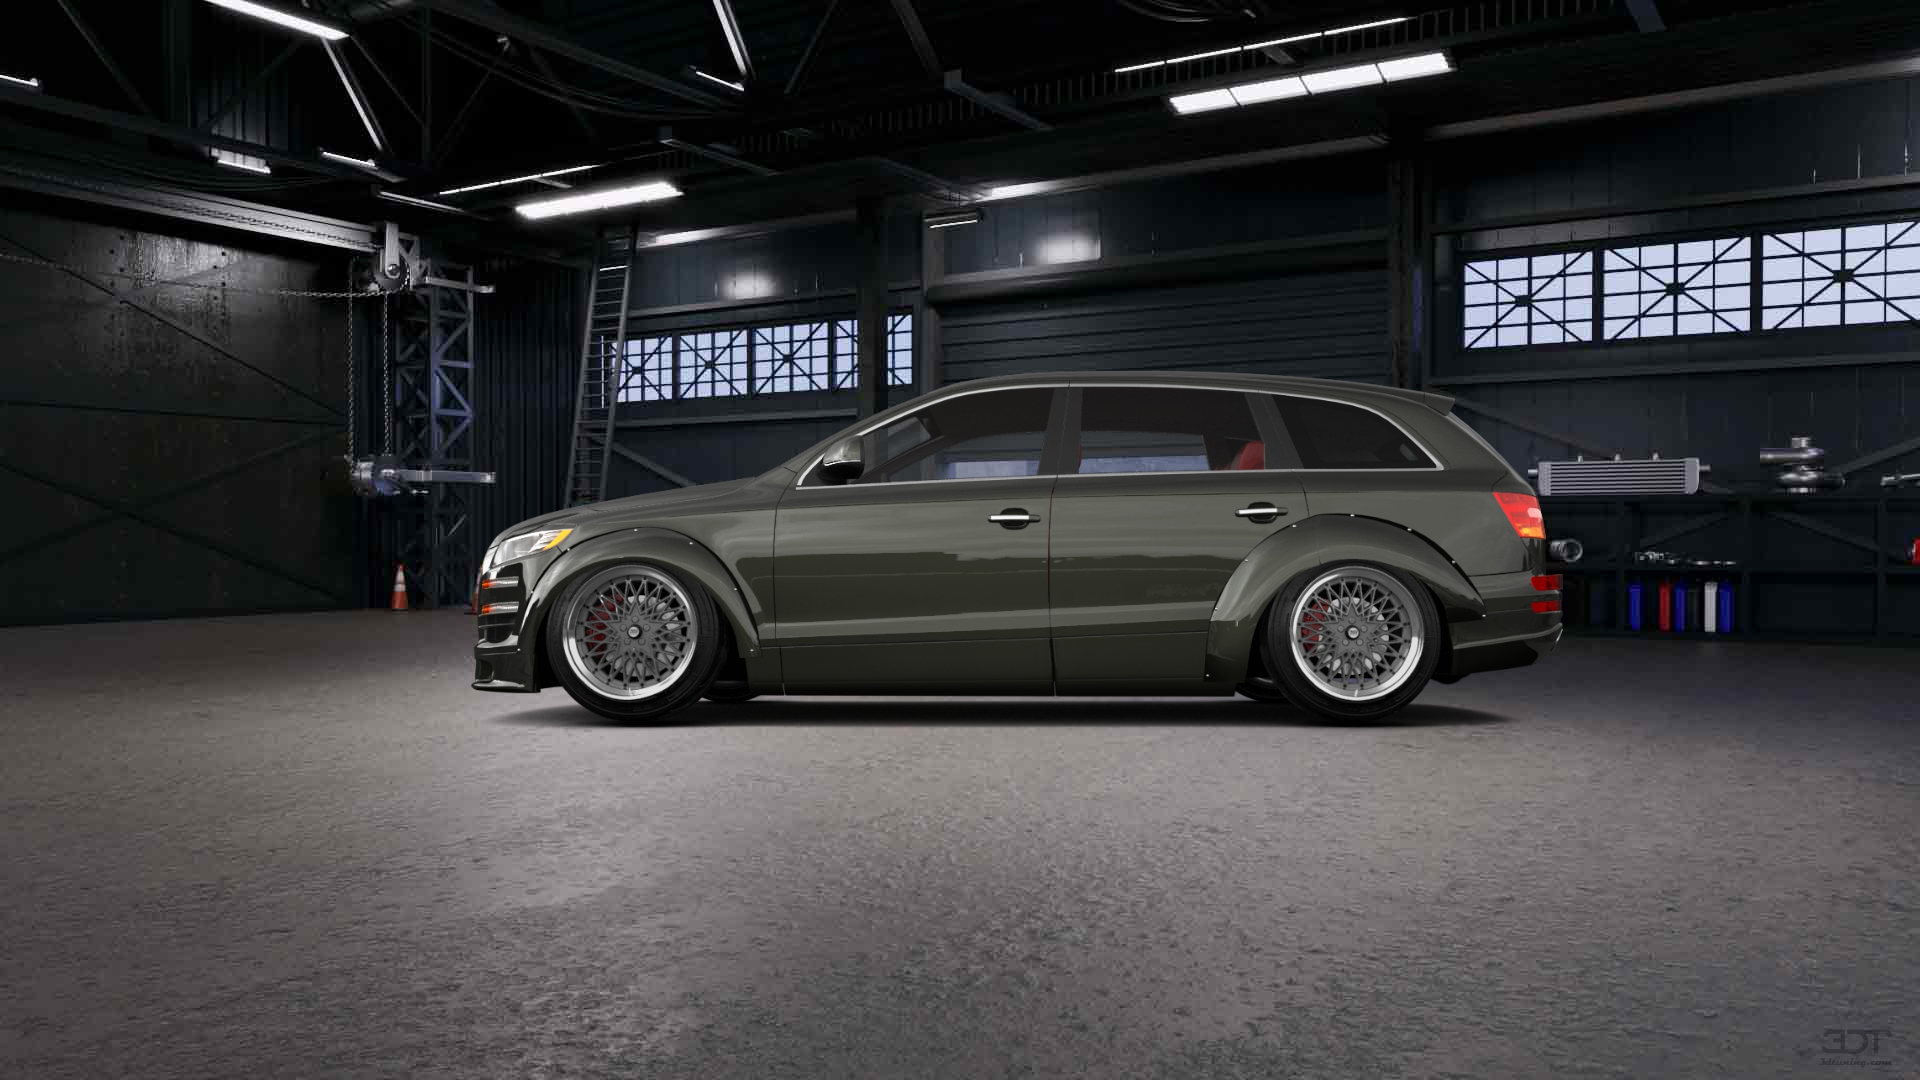 Audi Q7 Luxury SUV 2010